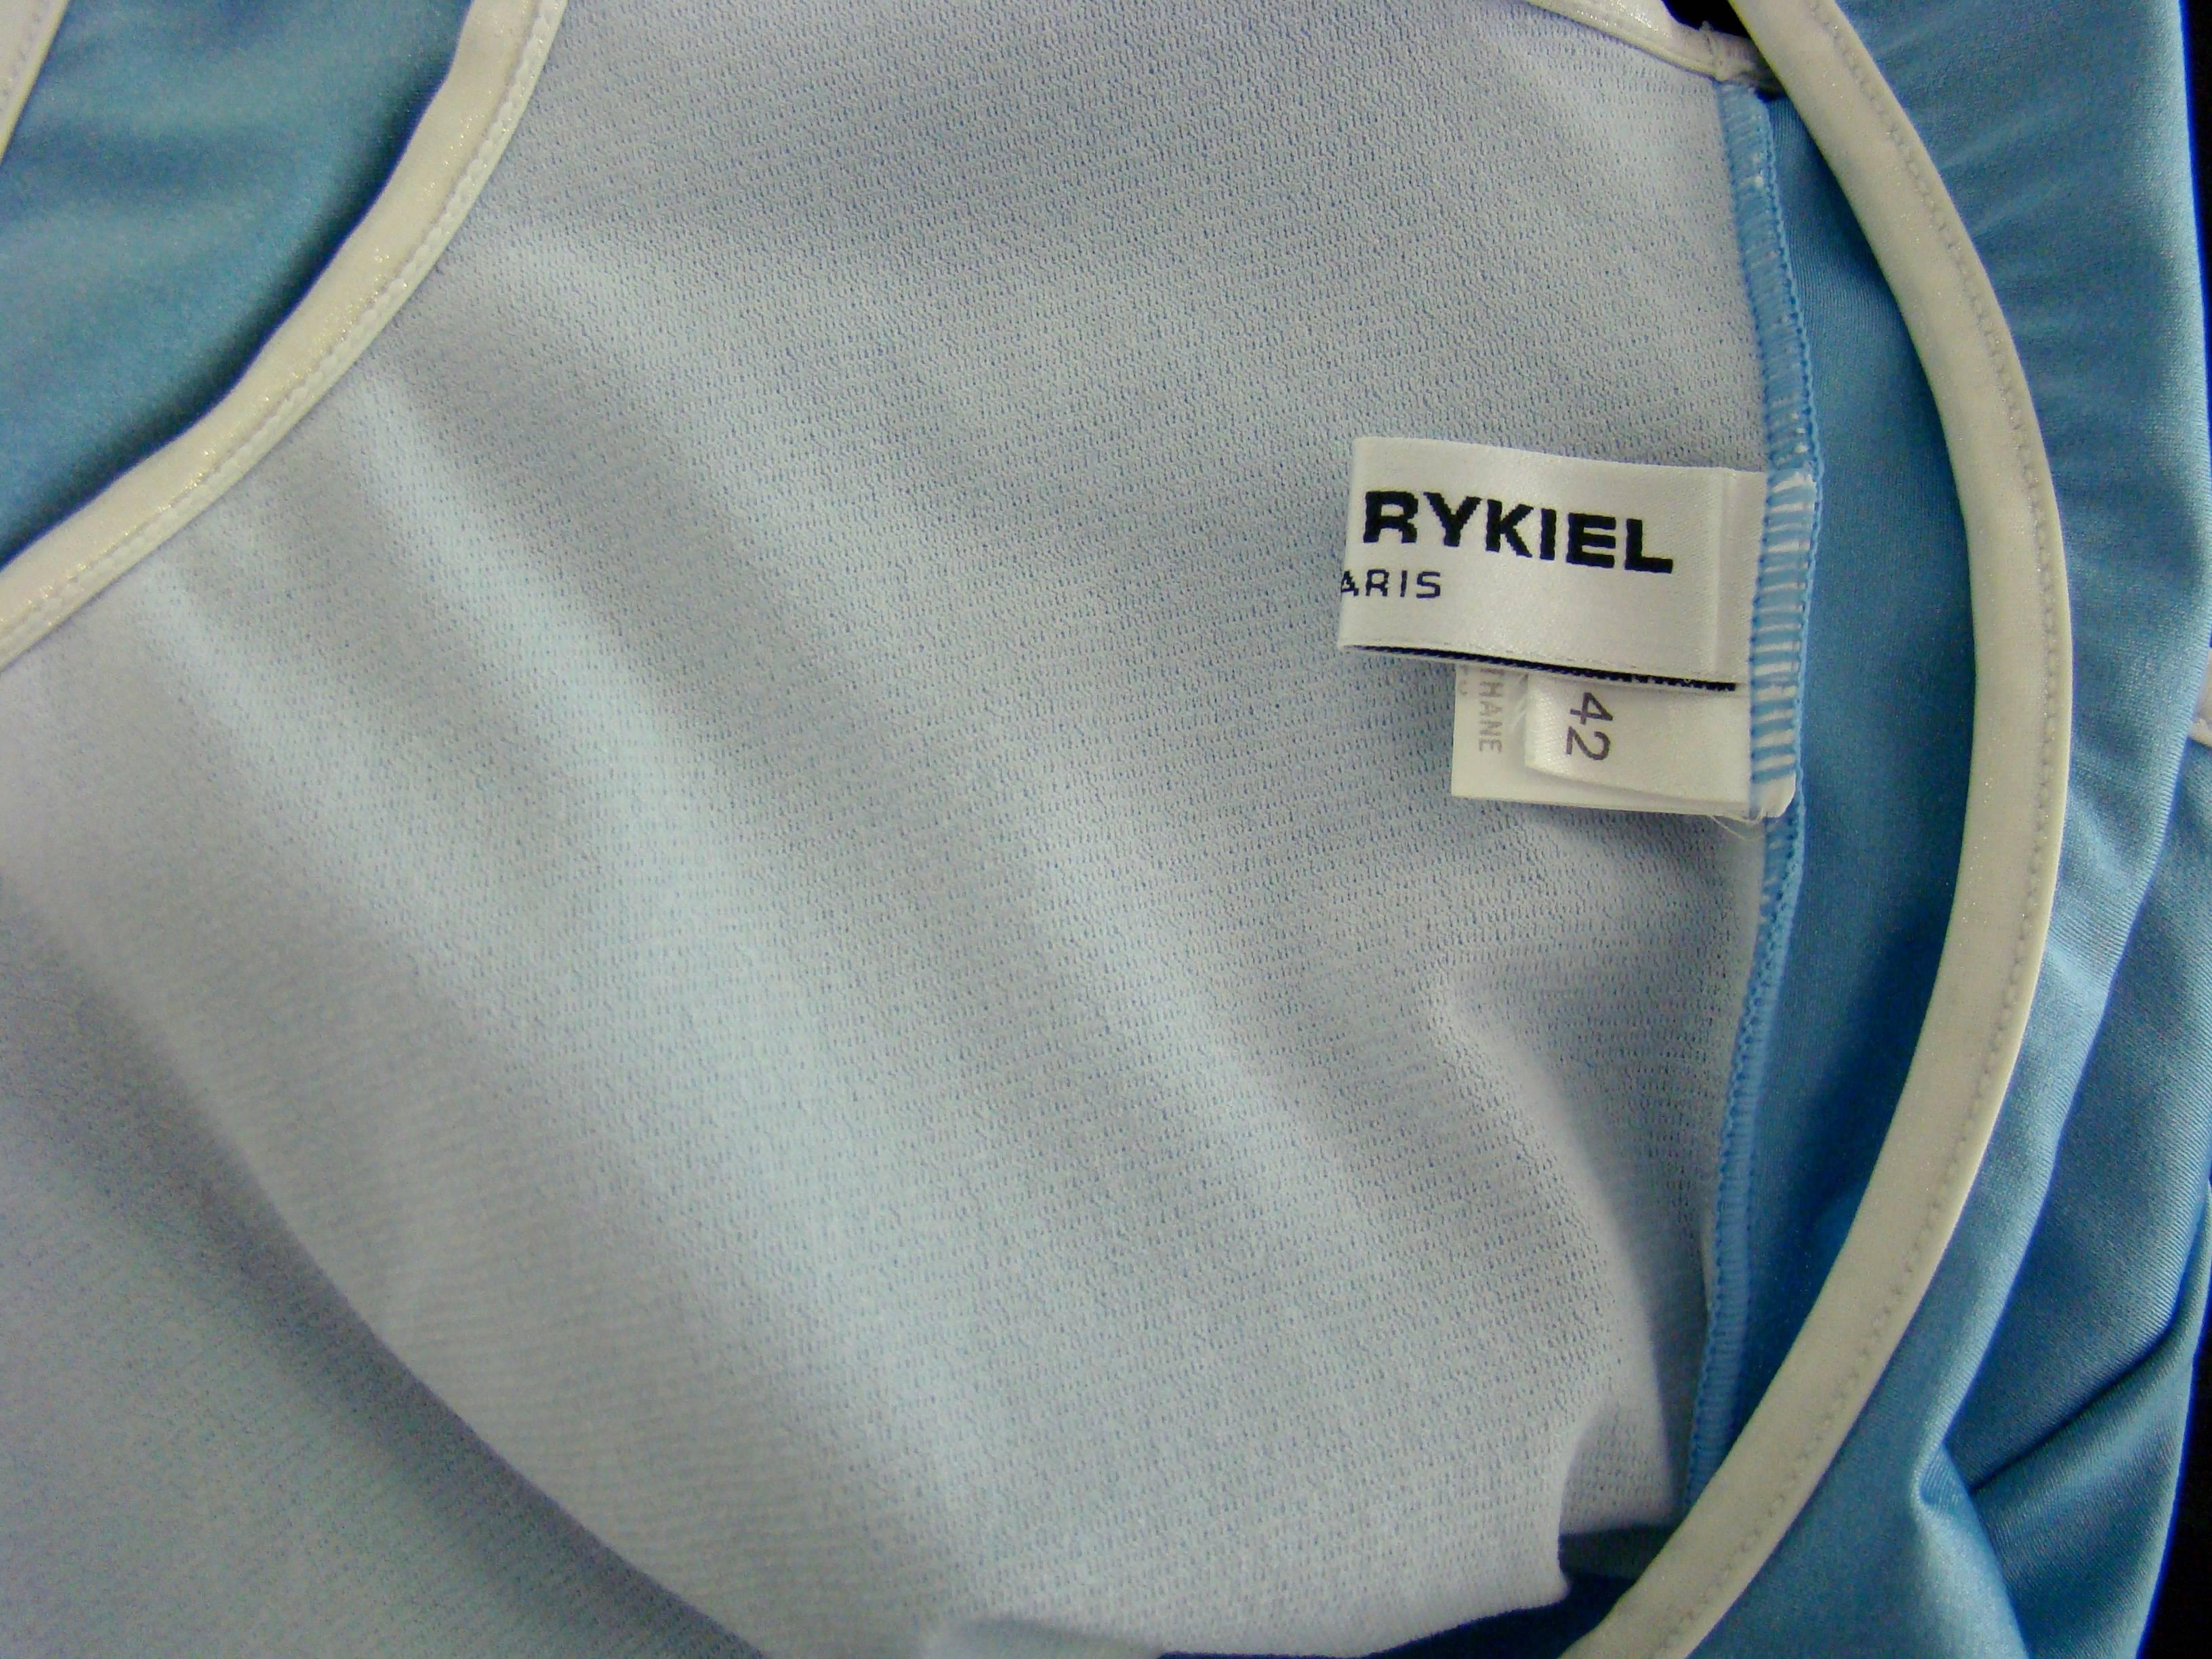 Sonia Rykiel Blue Ciel Bathing Suit Featuring Initials Logo For Sale 2